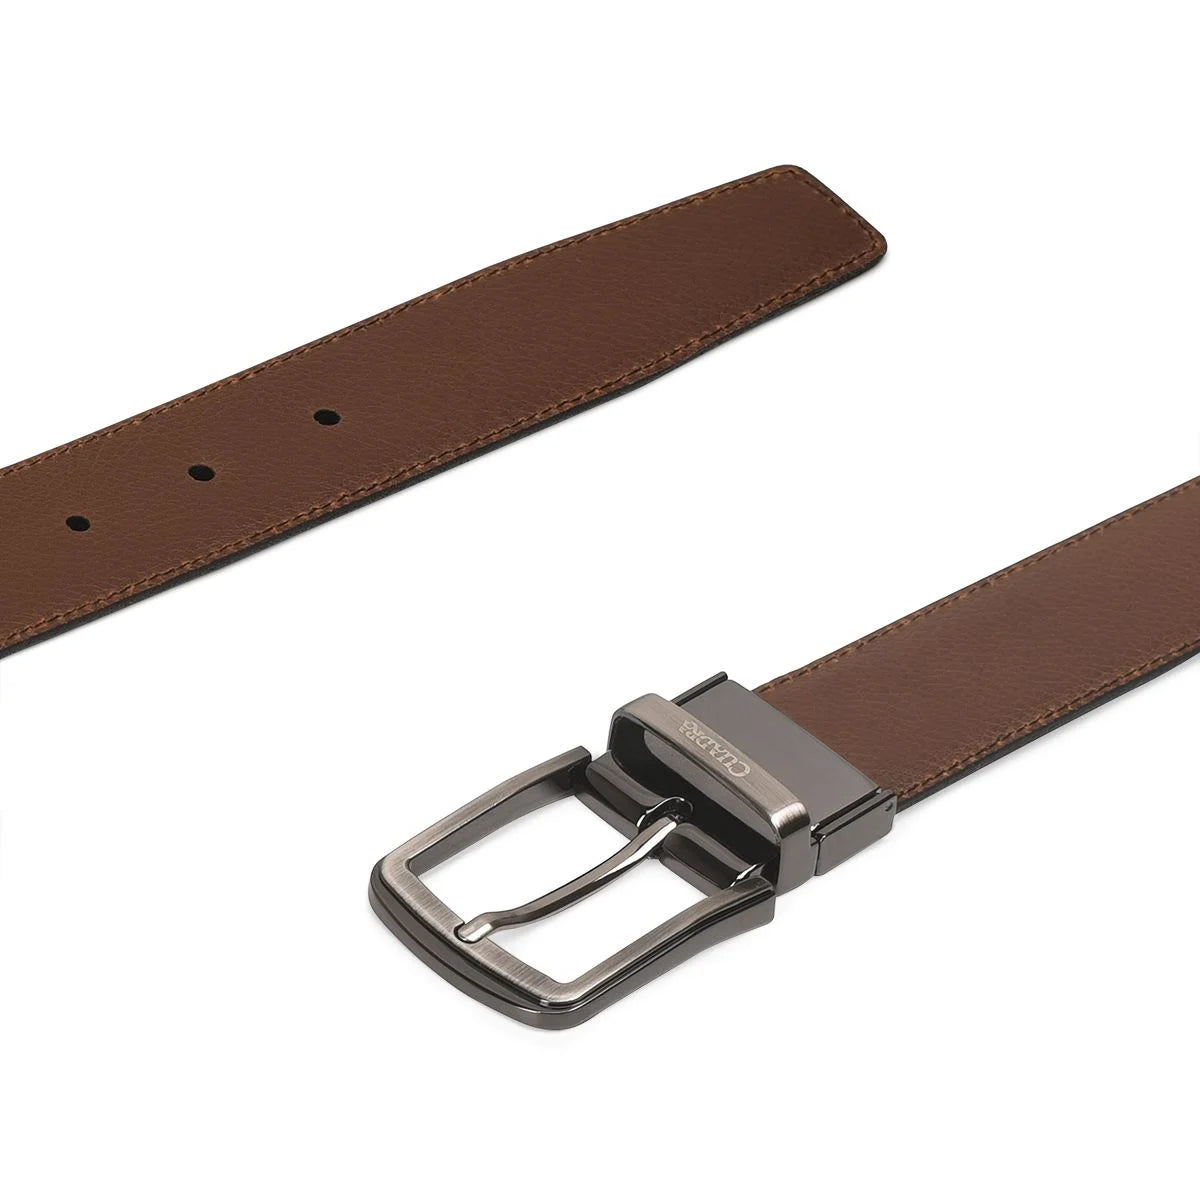 Reversible Leather Belt - Dark brown - Men